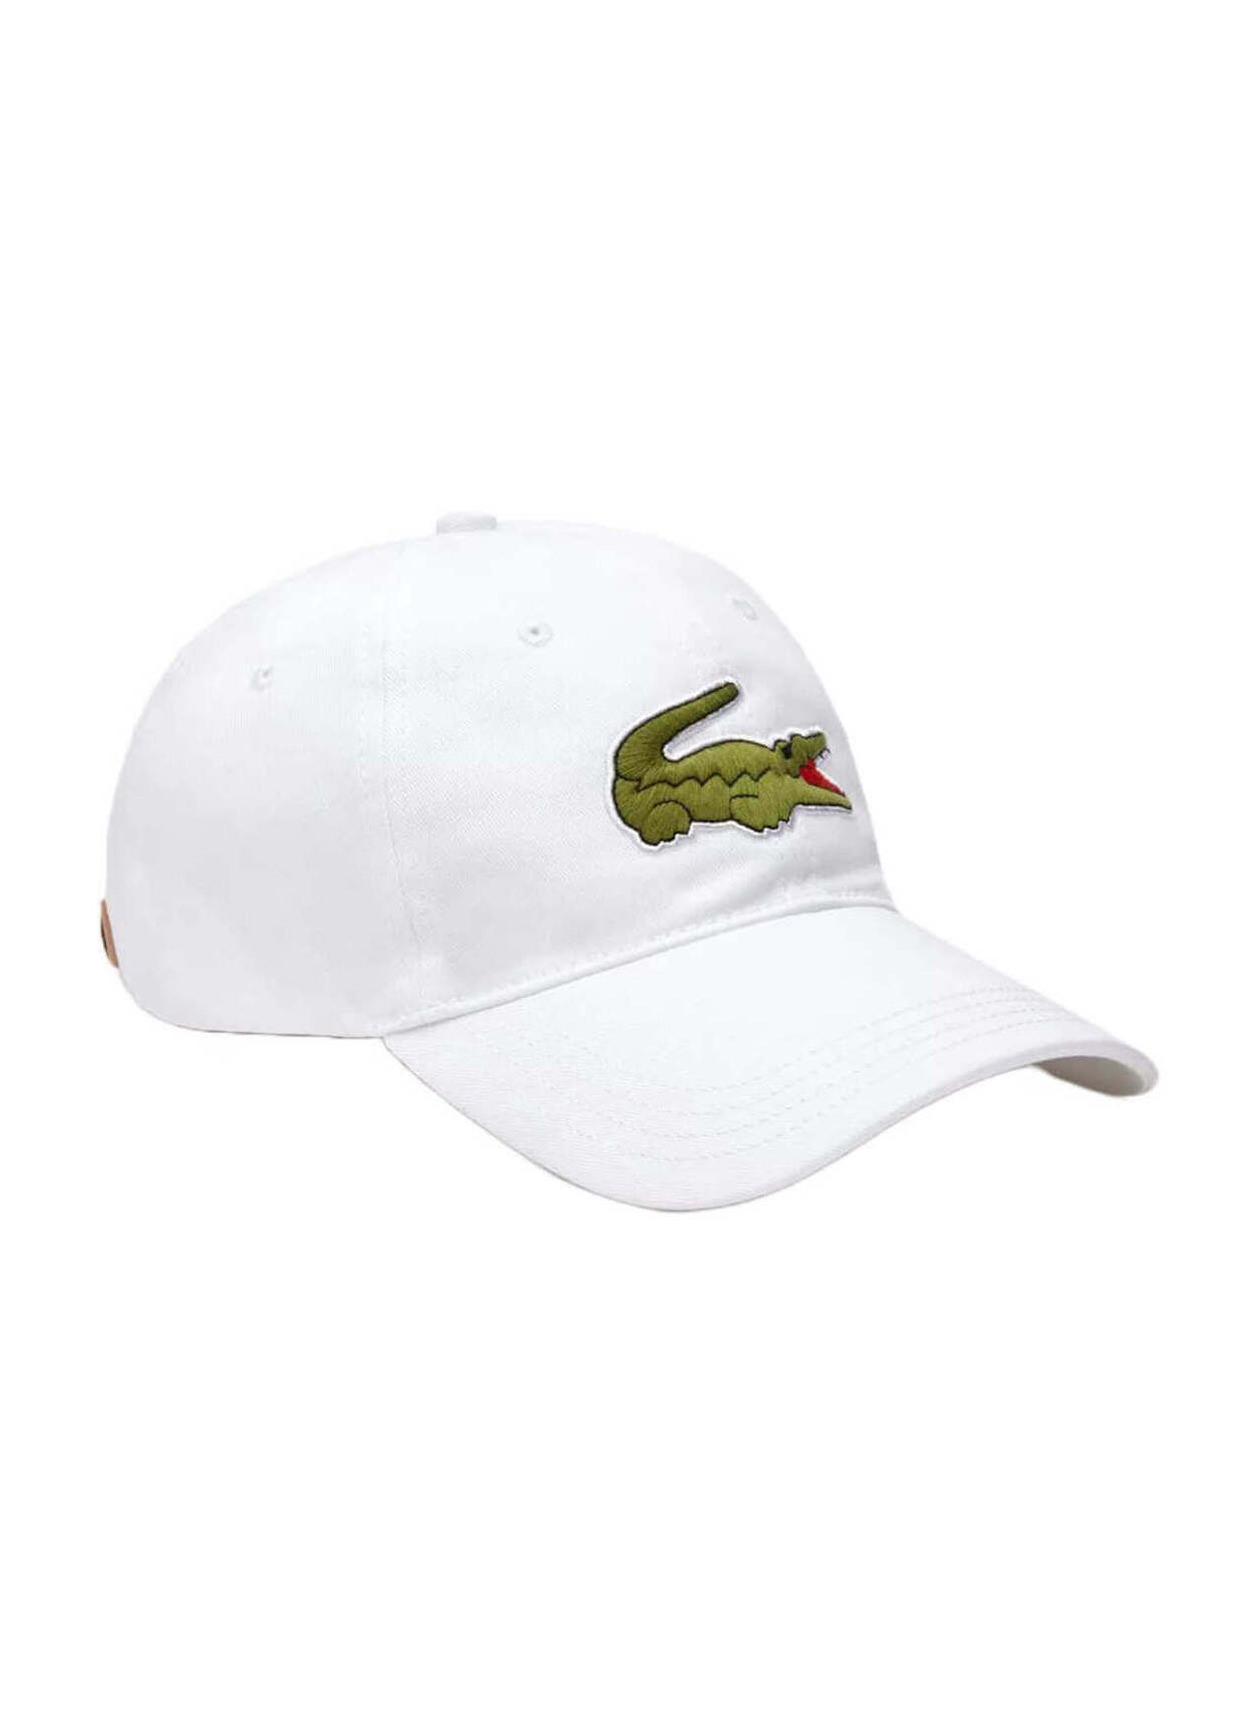 Lacoste White Contrast Strap And Oversized Crocodile Cotton Hat